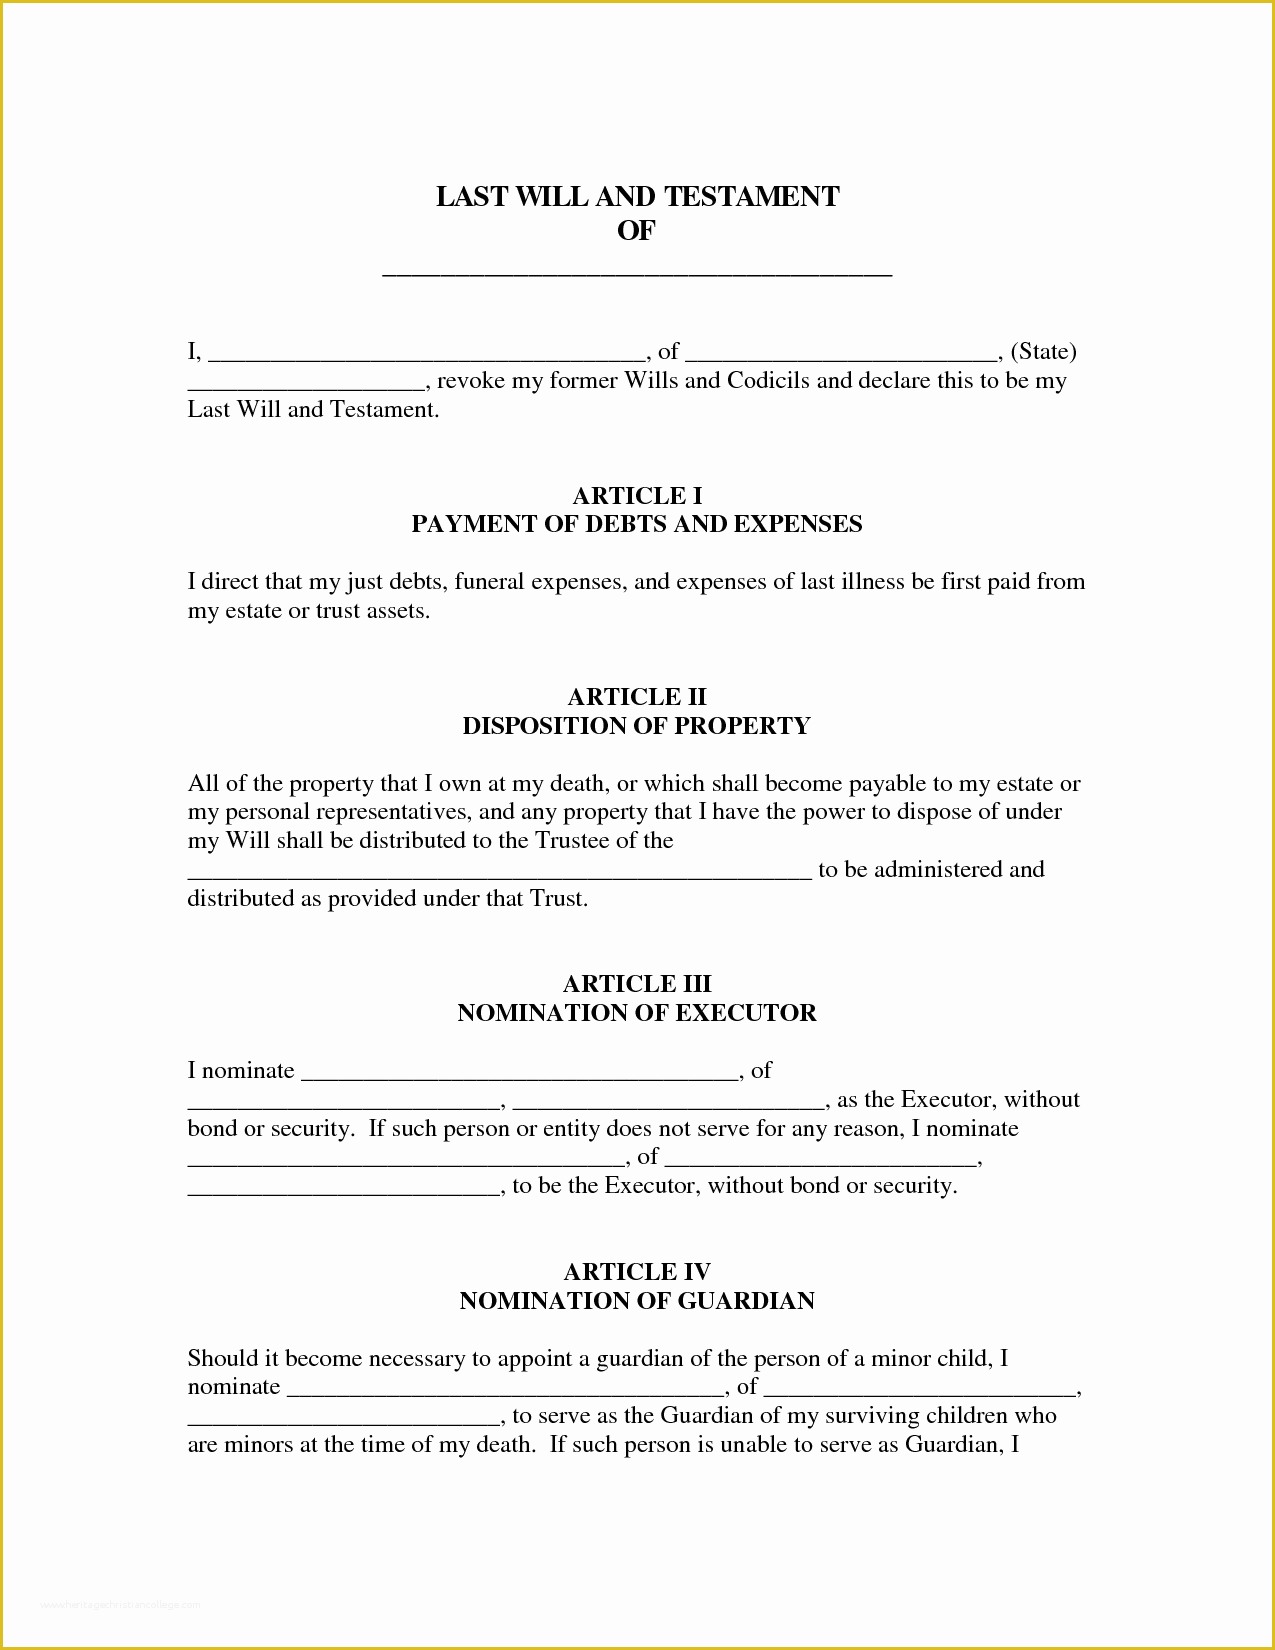 Last Will and Testament Arizona Template Free Of Last Will and Testament Template Free Printable Documents